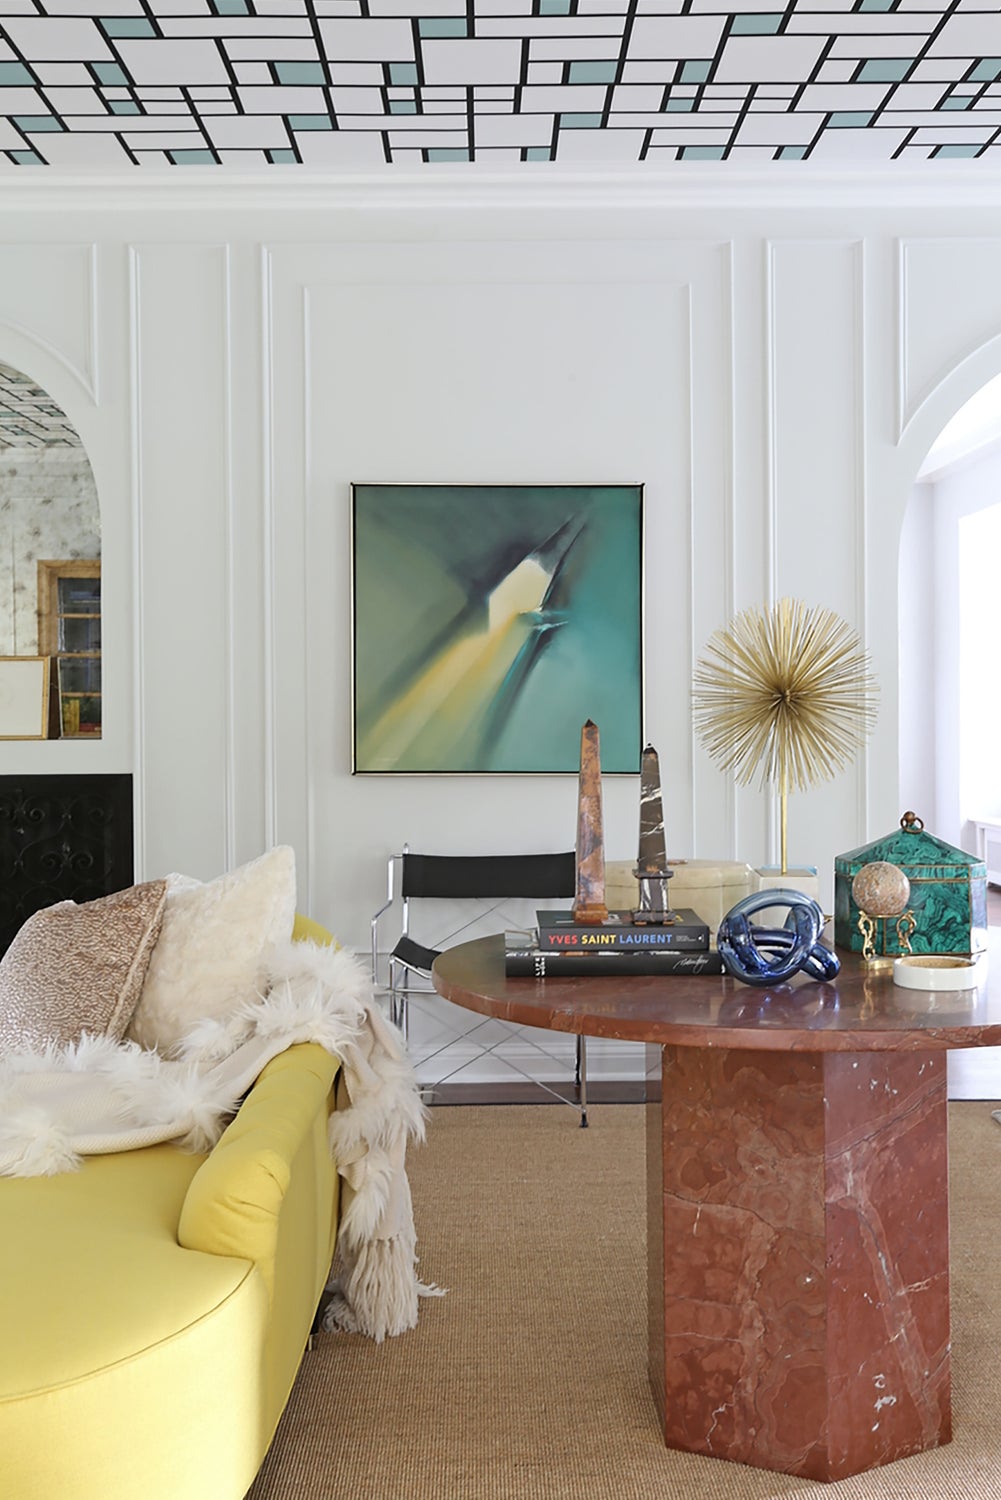 Living Room by Summer Thornton Design on 1stdibs